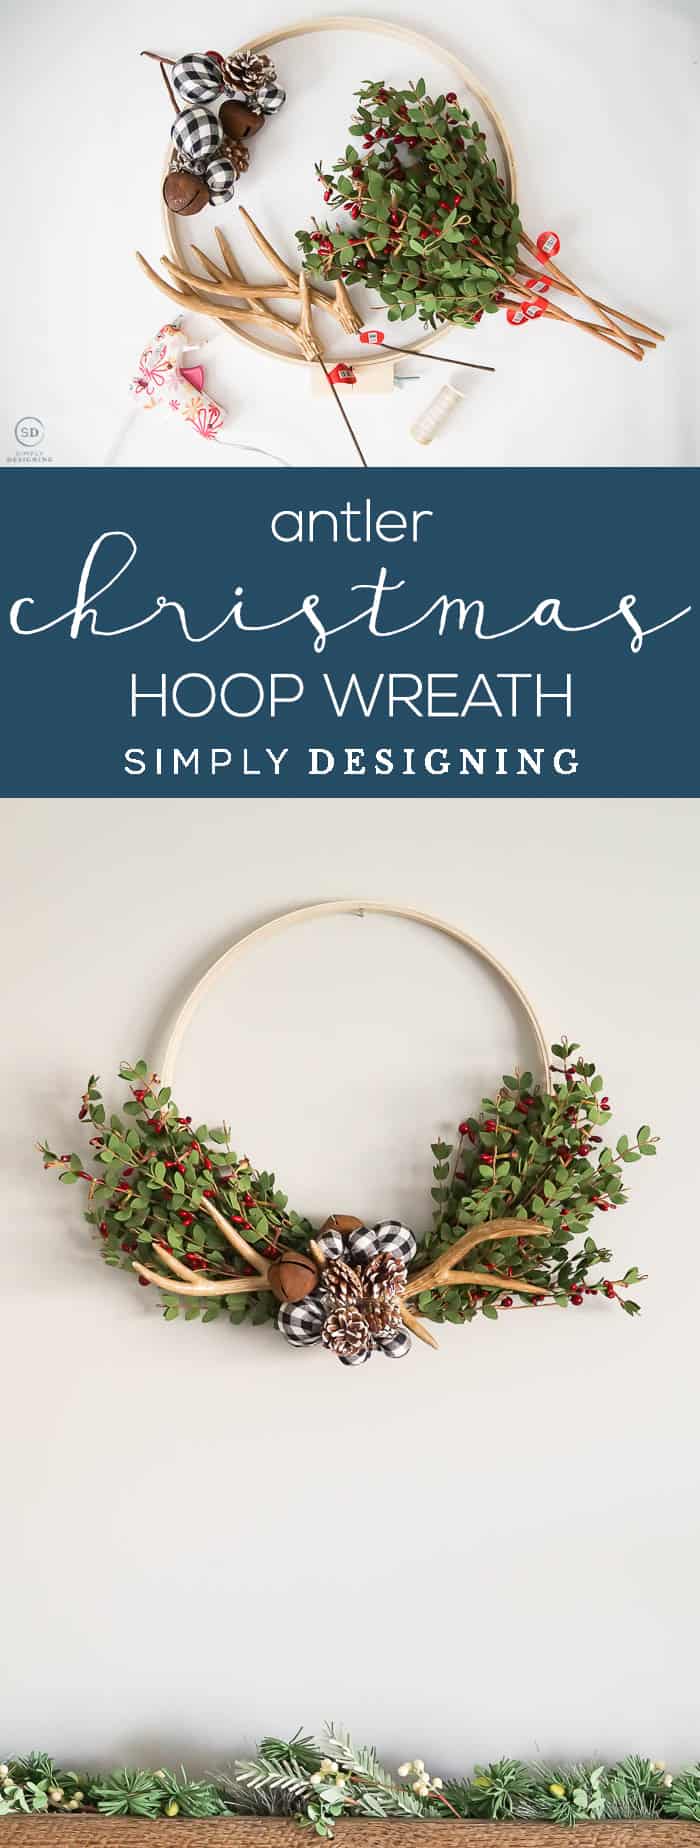 Antler Christmas Hoop Wreath - a really easy and beautiful farmhouse hoop wreath for the holidays